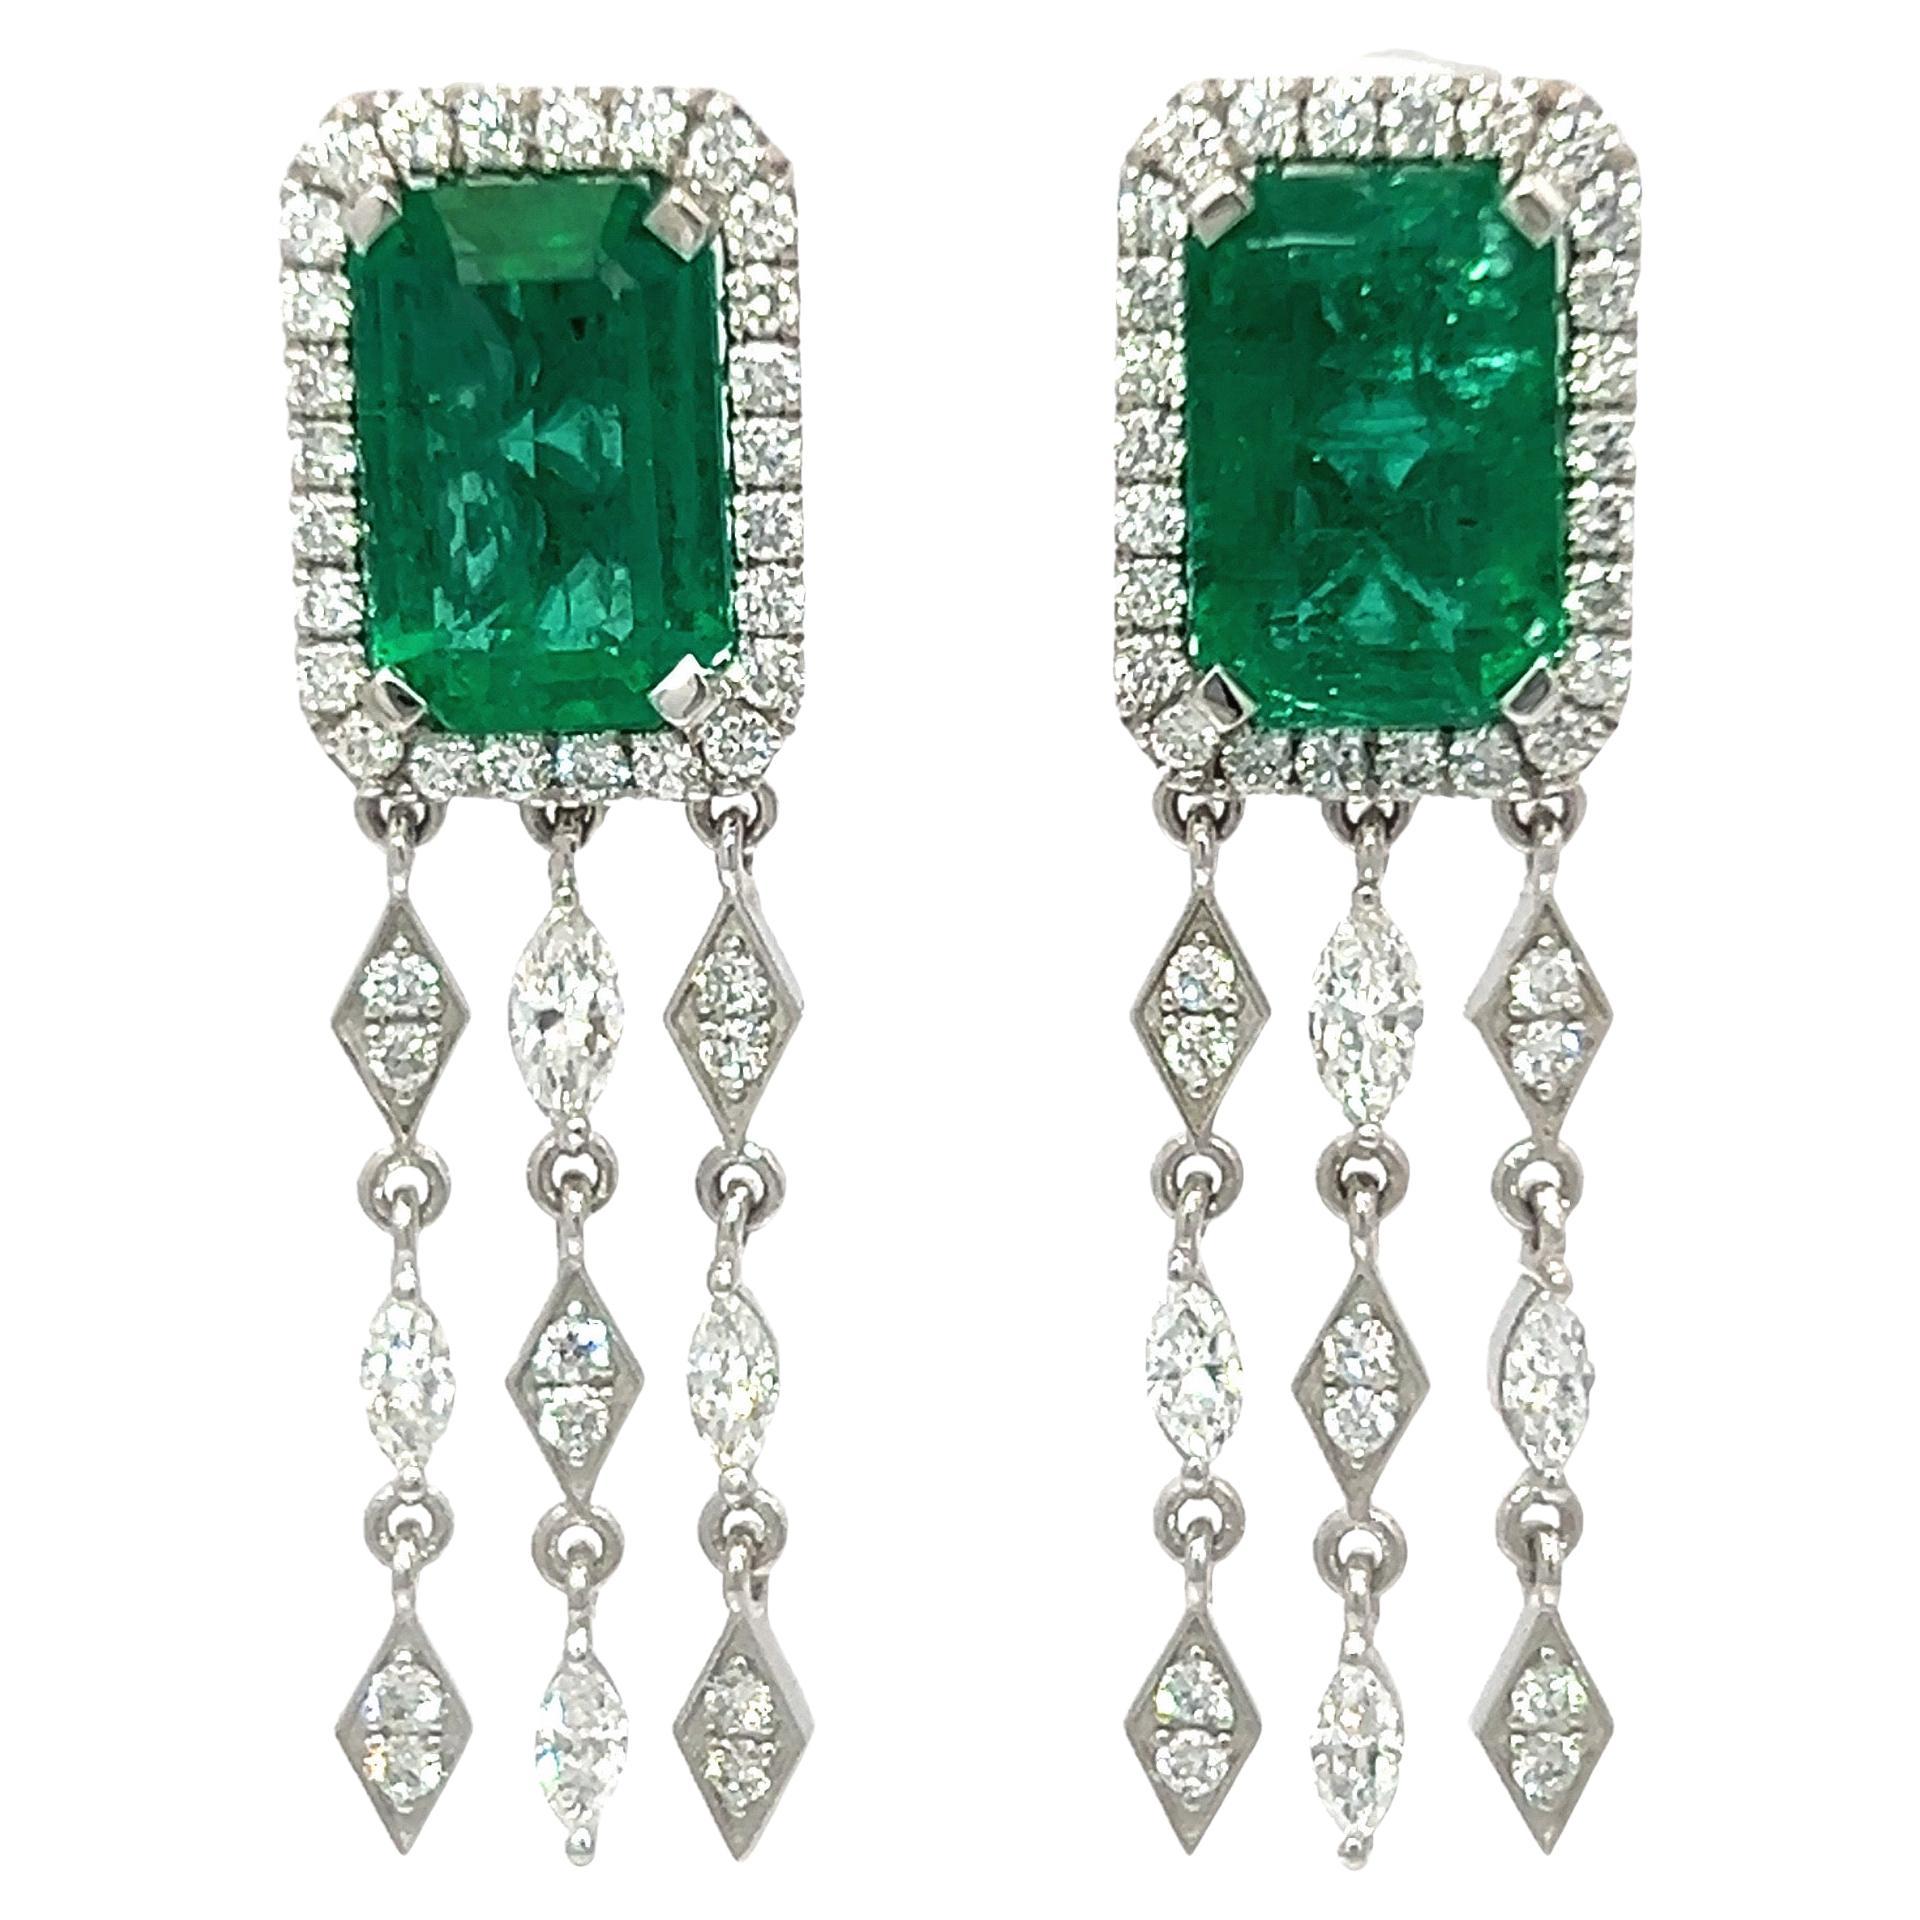 5.92 Carat Zambian Emerald Earrings